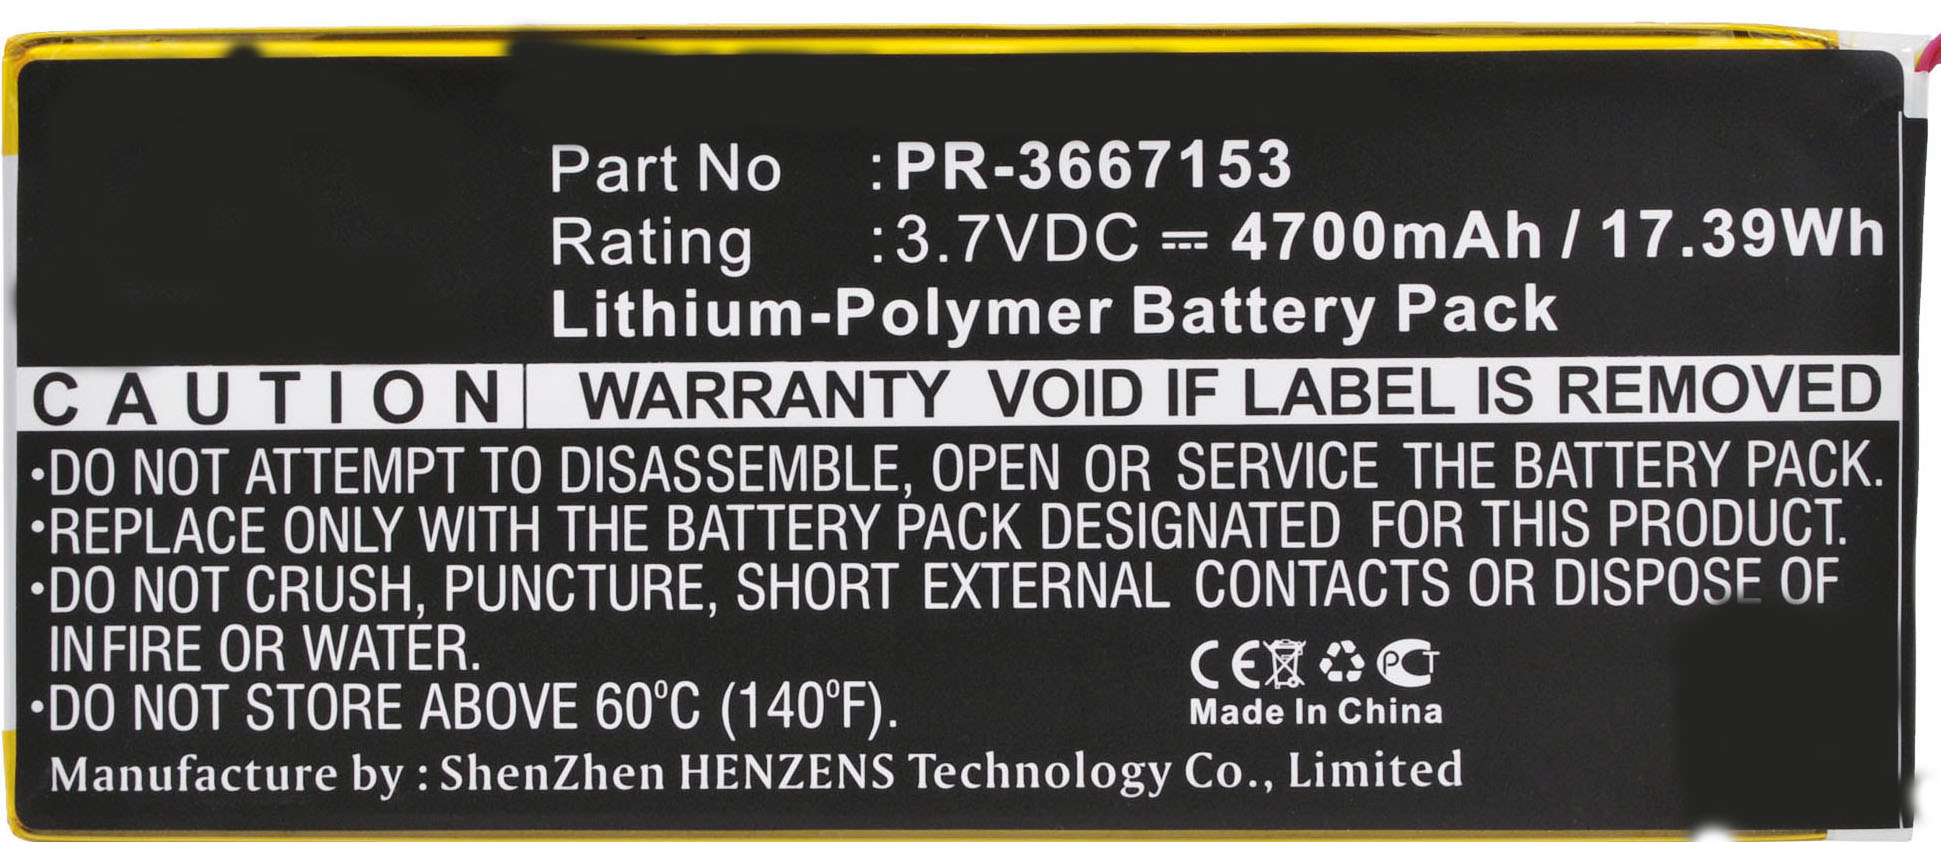 Batteries for NabiReplacement